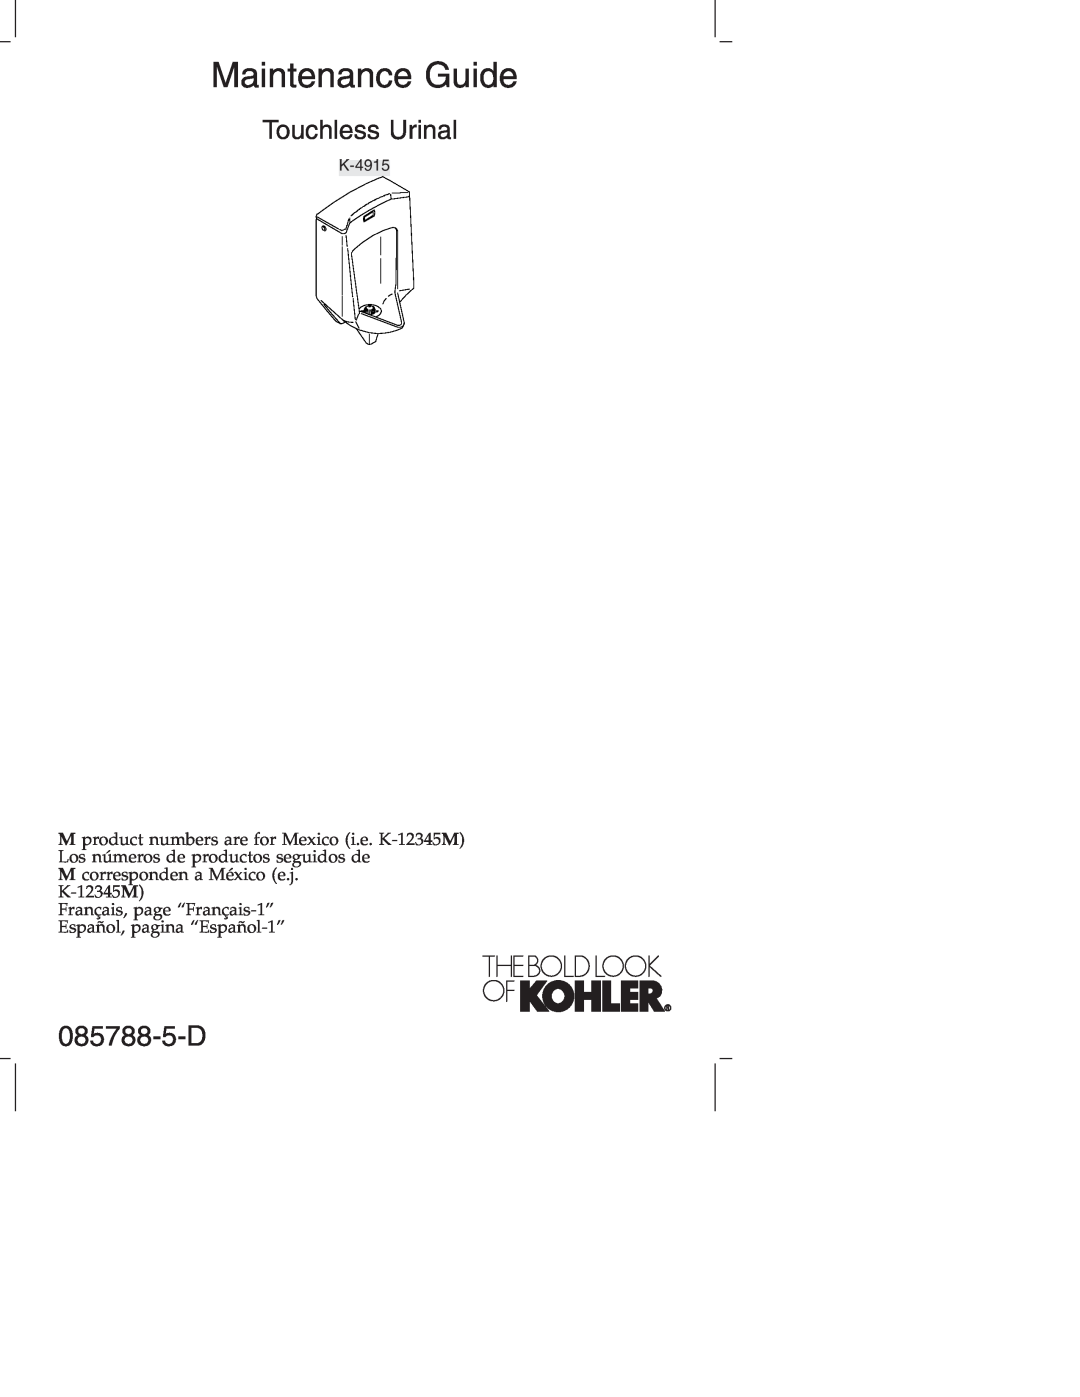 Kohler K4915 manual 085788-5-D, Maintenance Guide, Touchless Urinal 